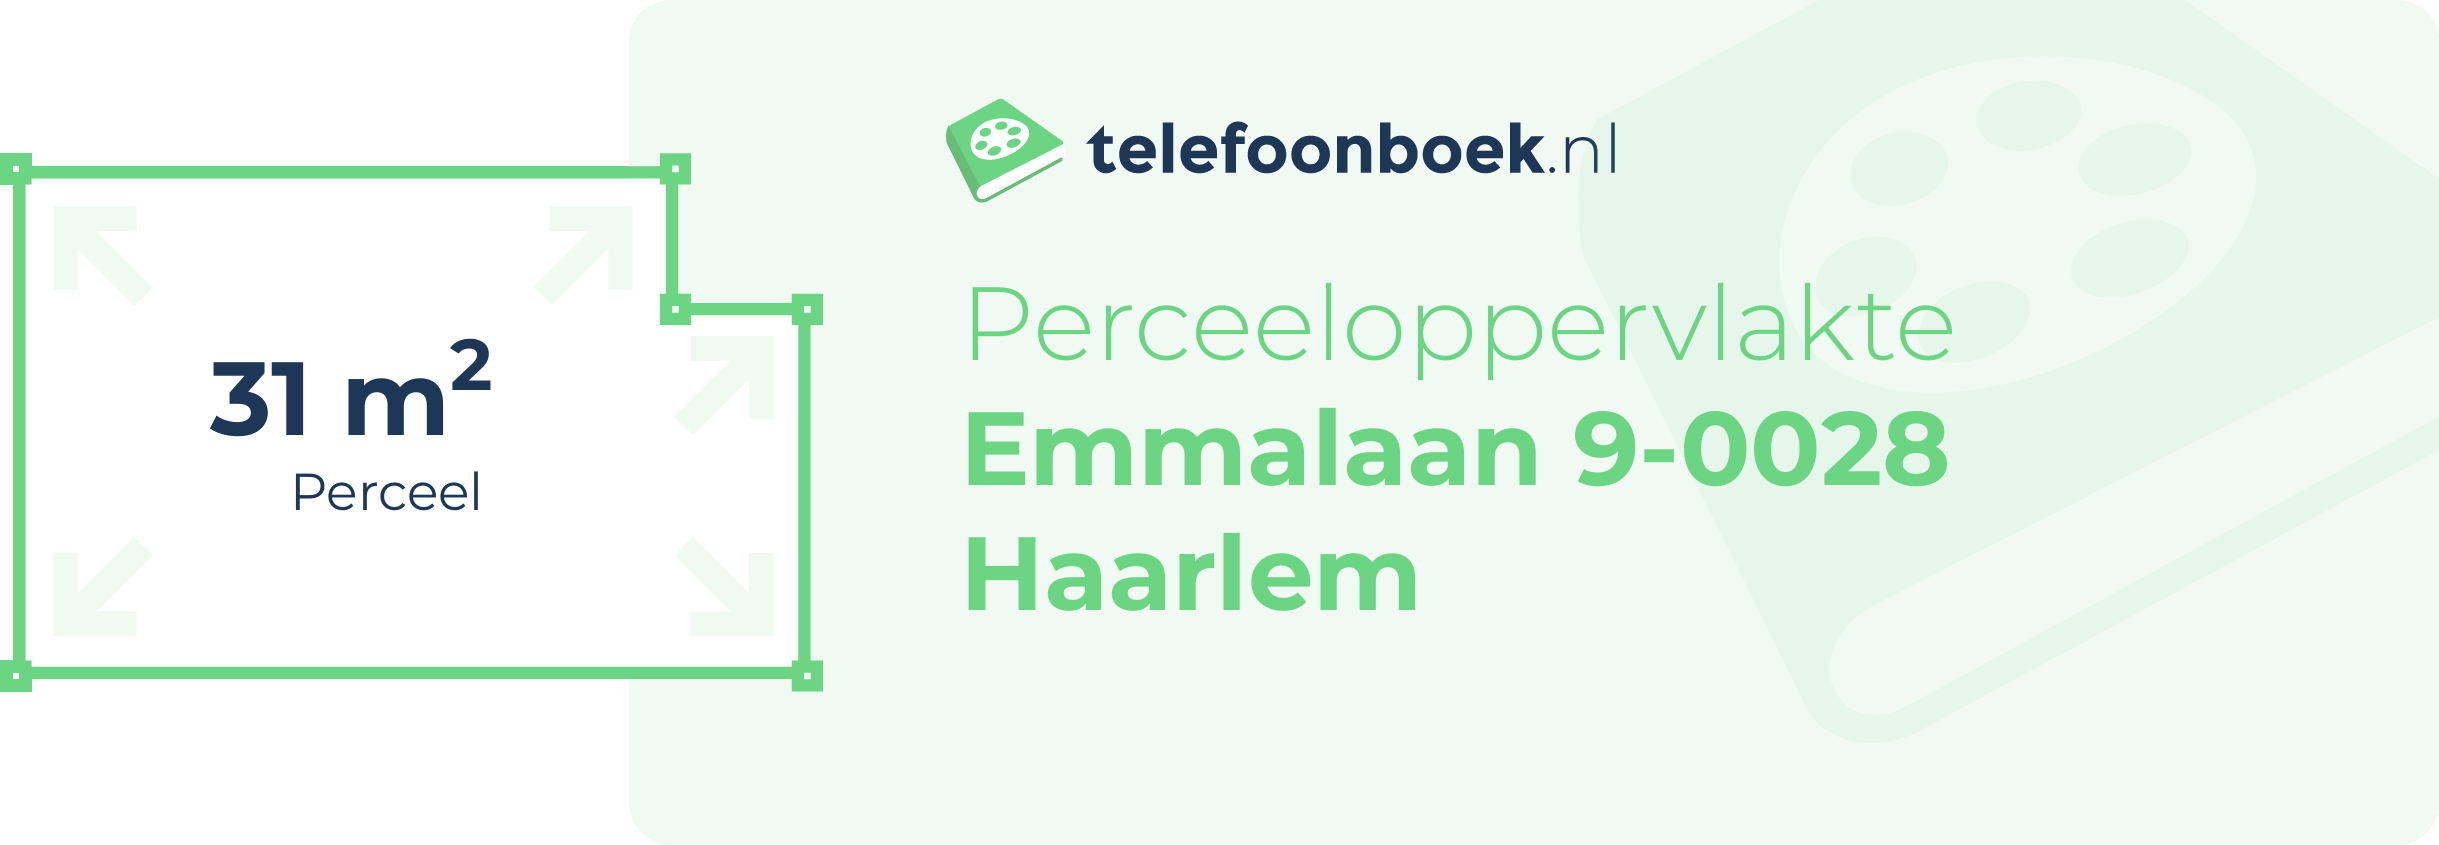 Perceeloppervlakte Emmalaan 9-0028 Haarlem